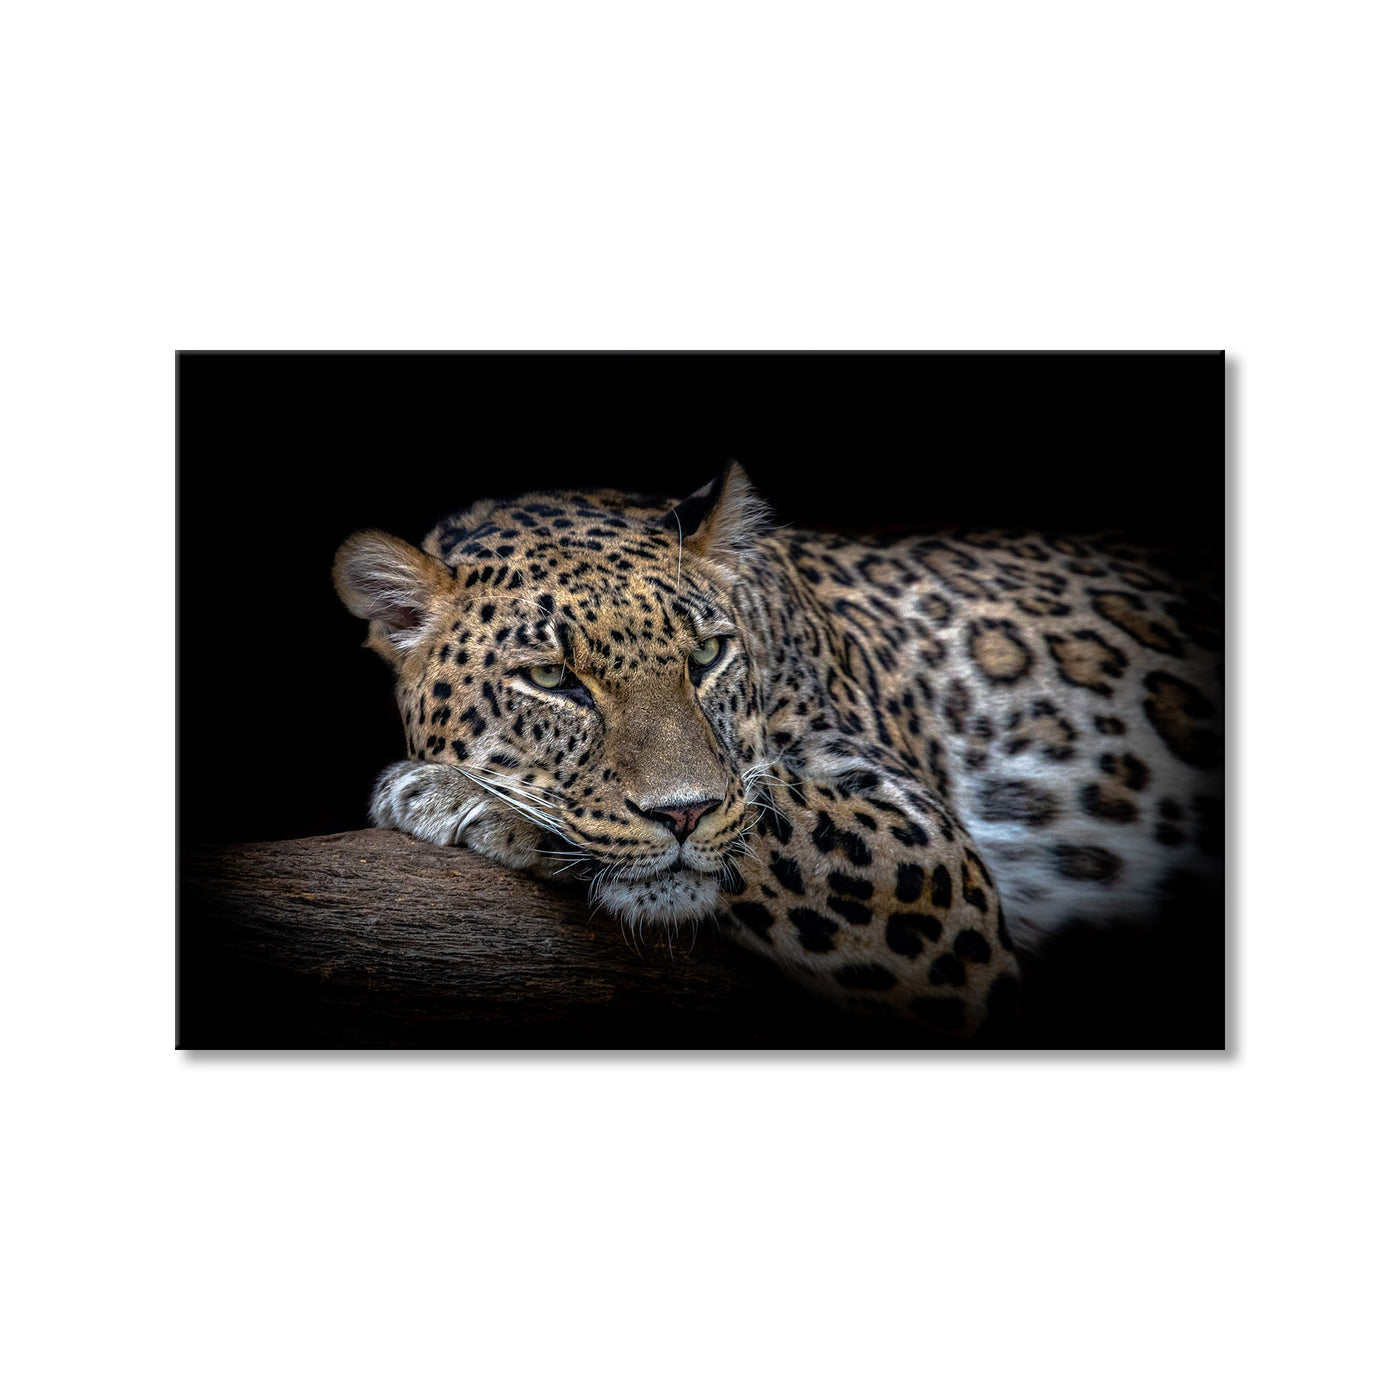 Leopard Resting